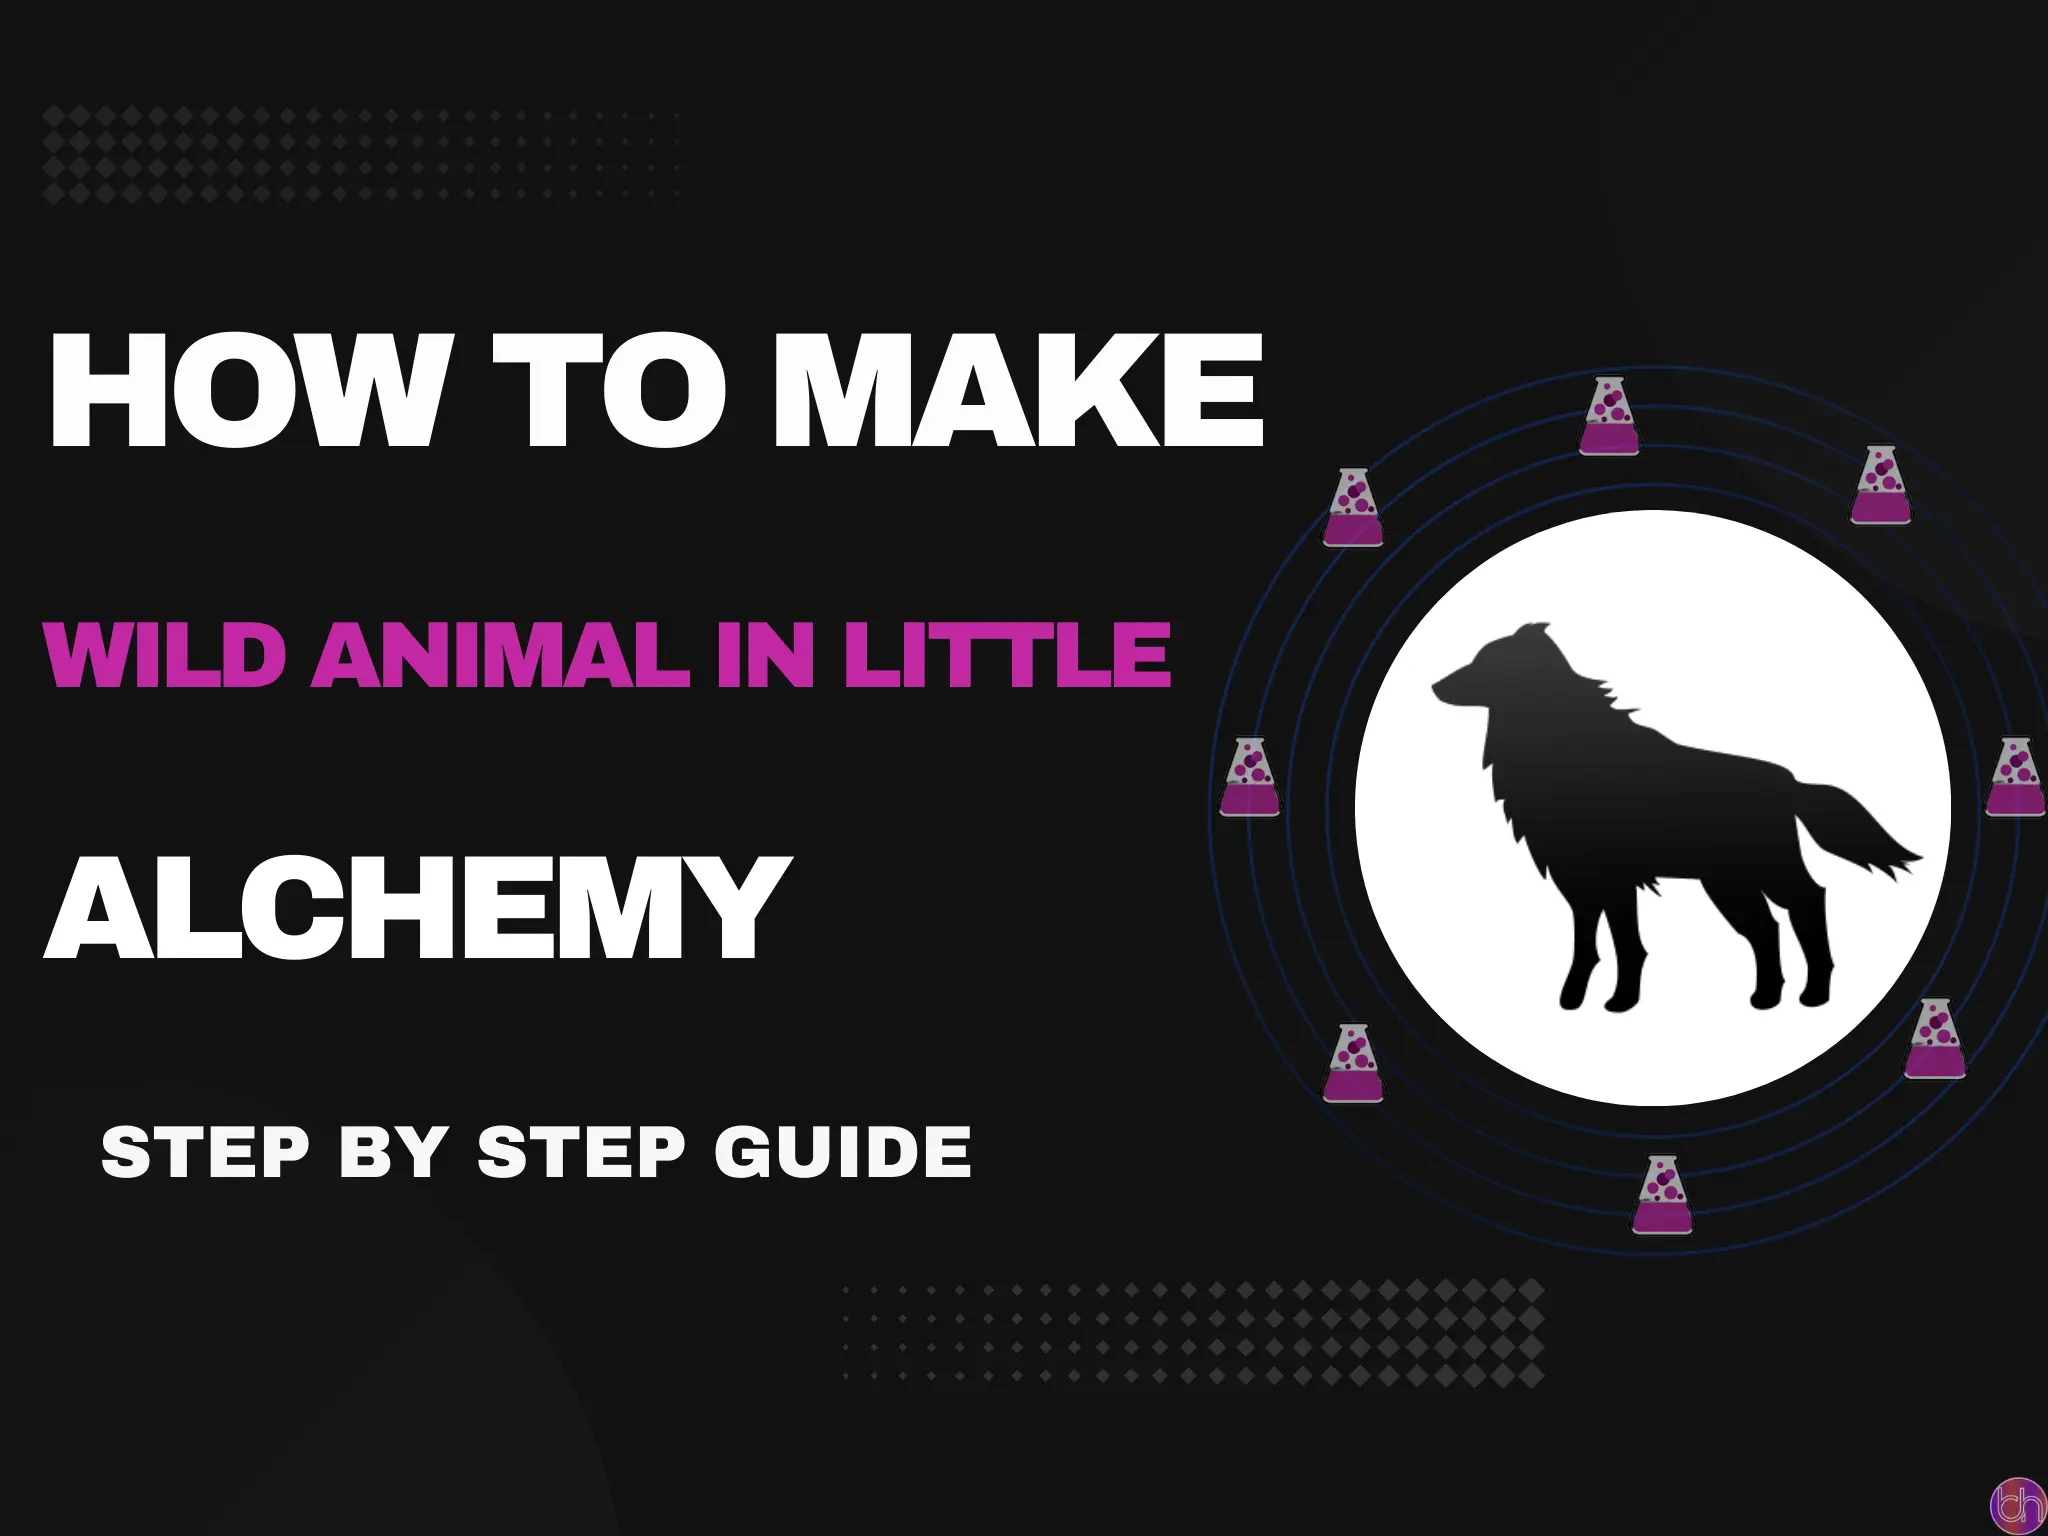 How to make Wild Animal in little alchemy